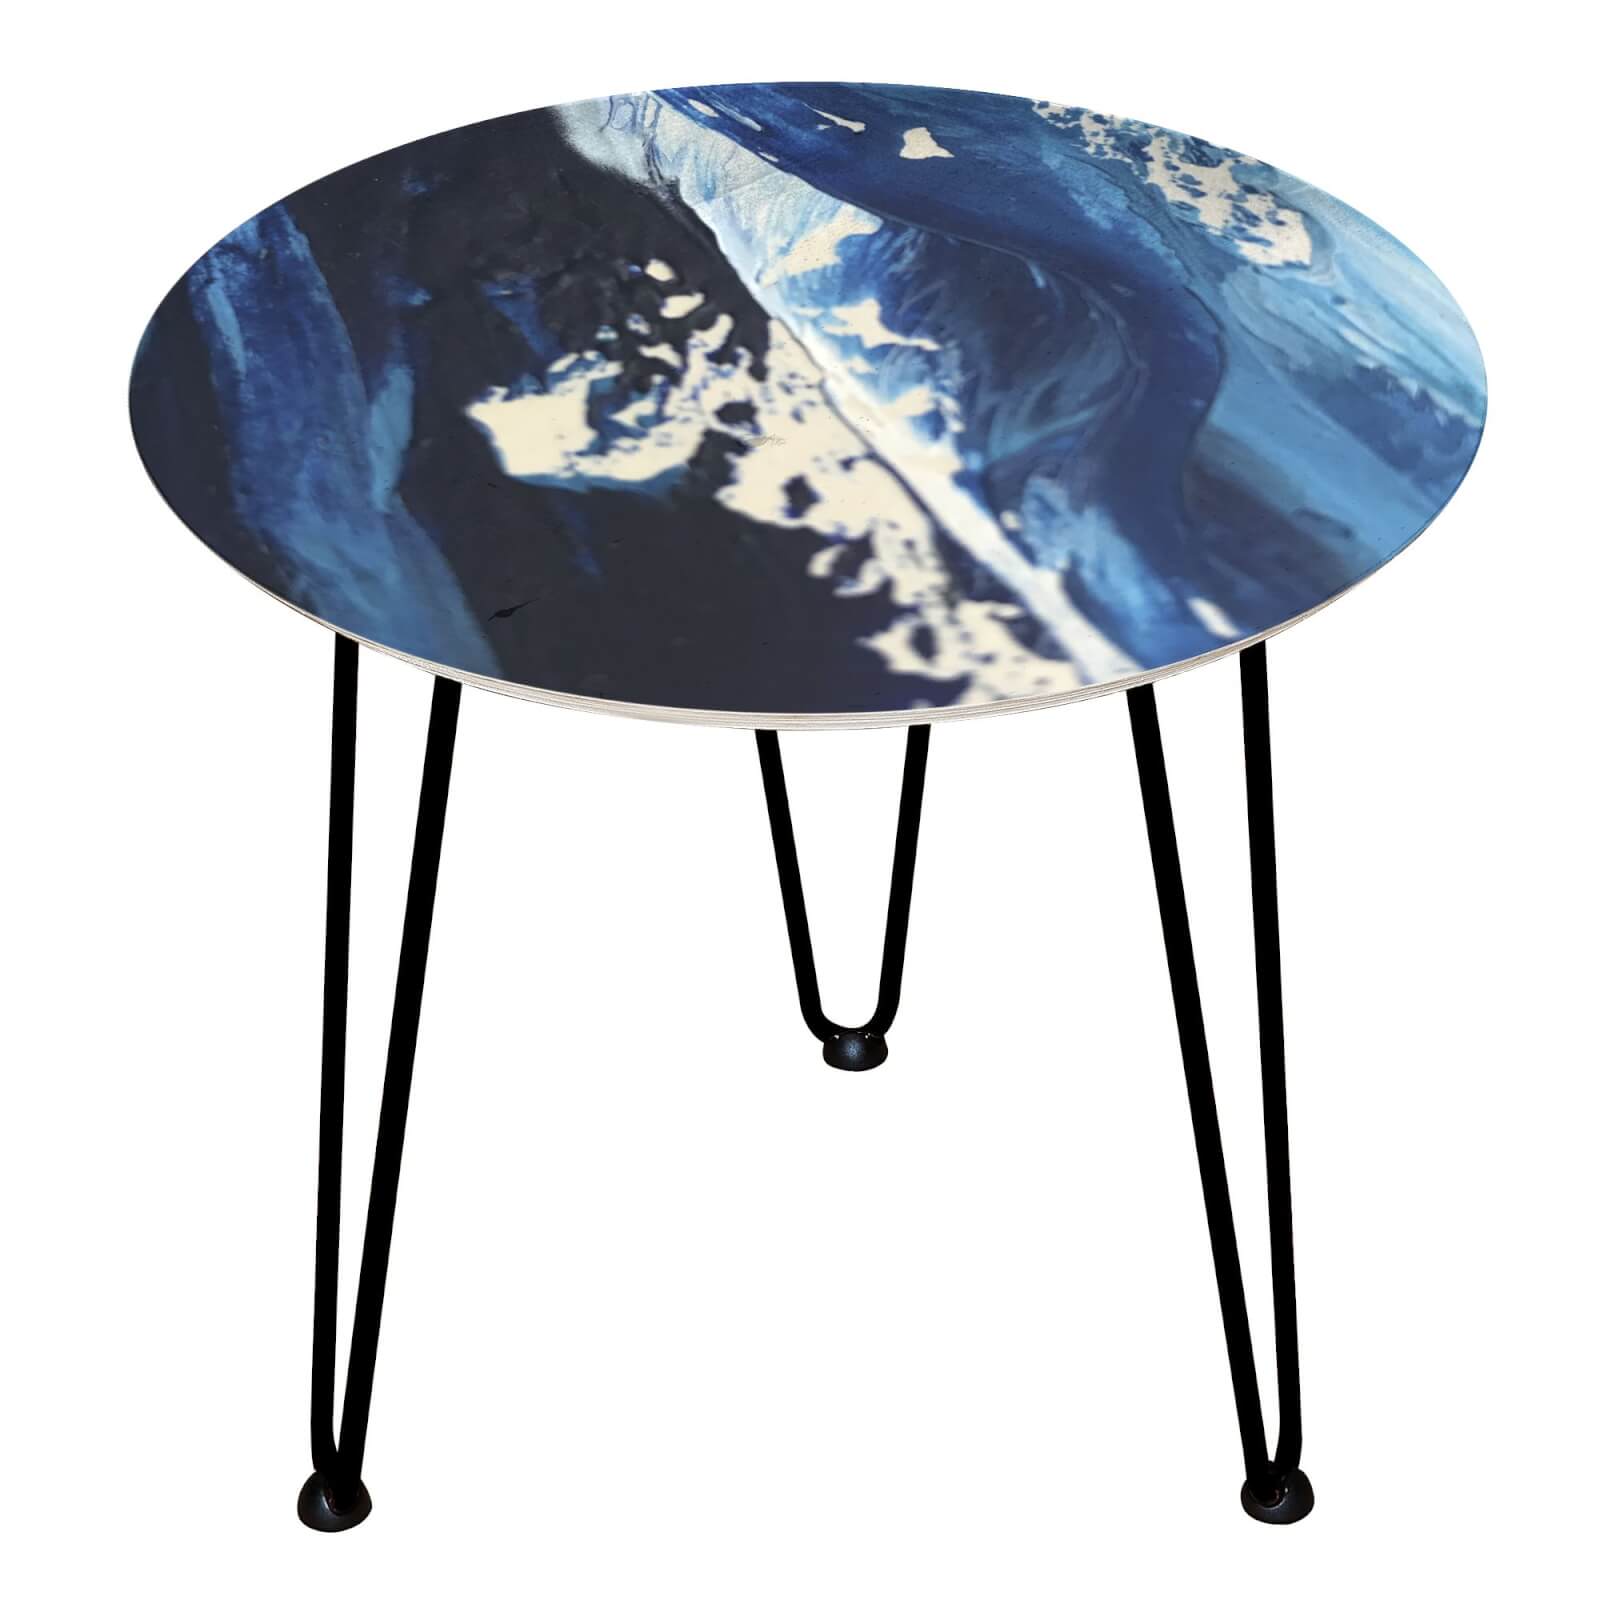 Decorsome - Paint Texture Wooden Side Table - Black